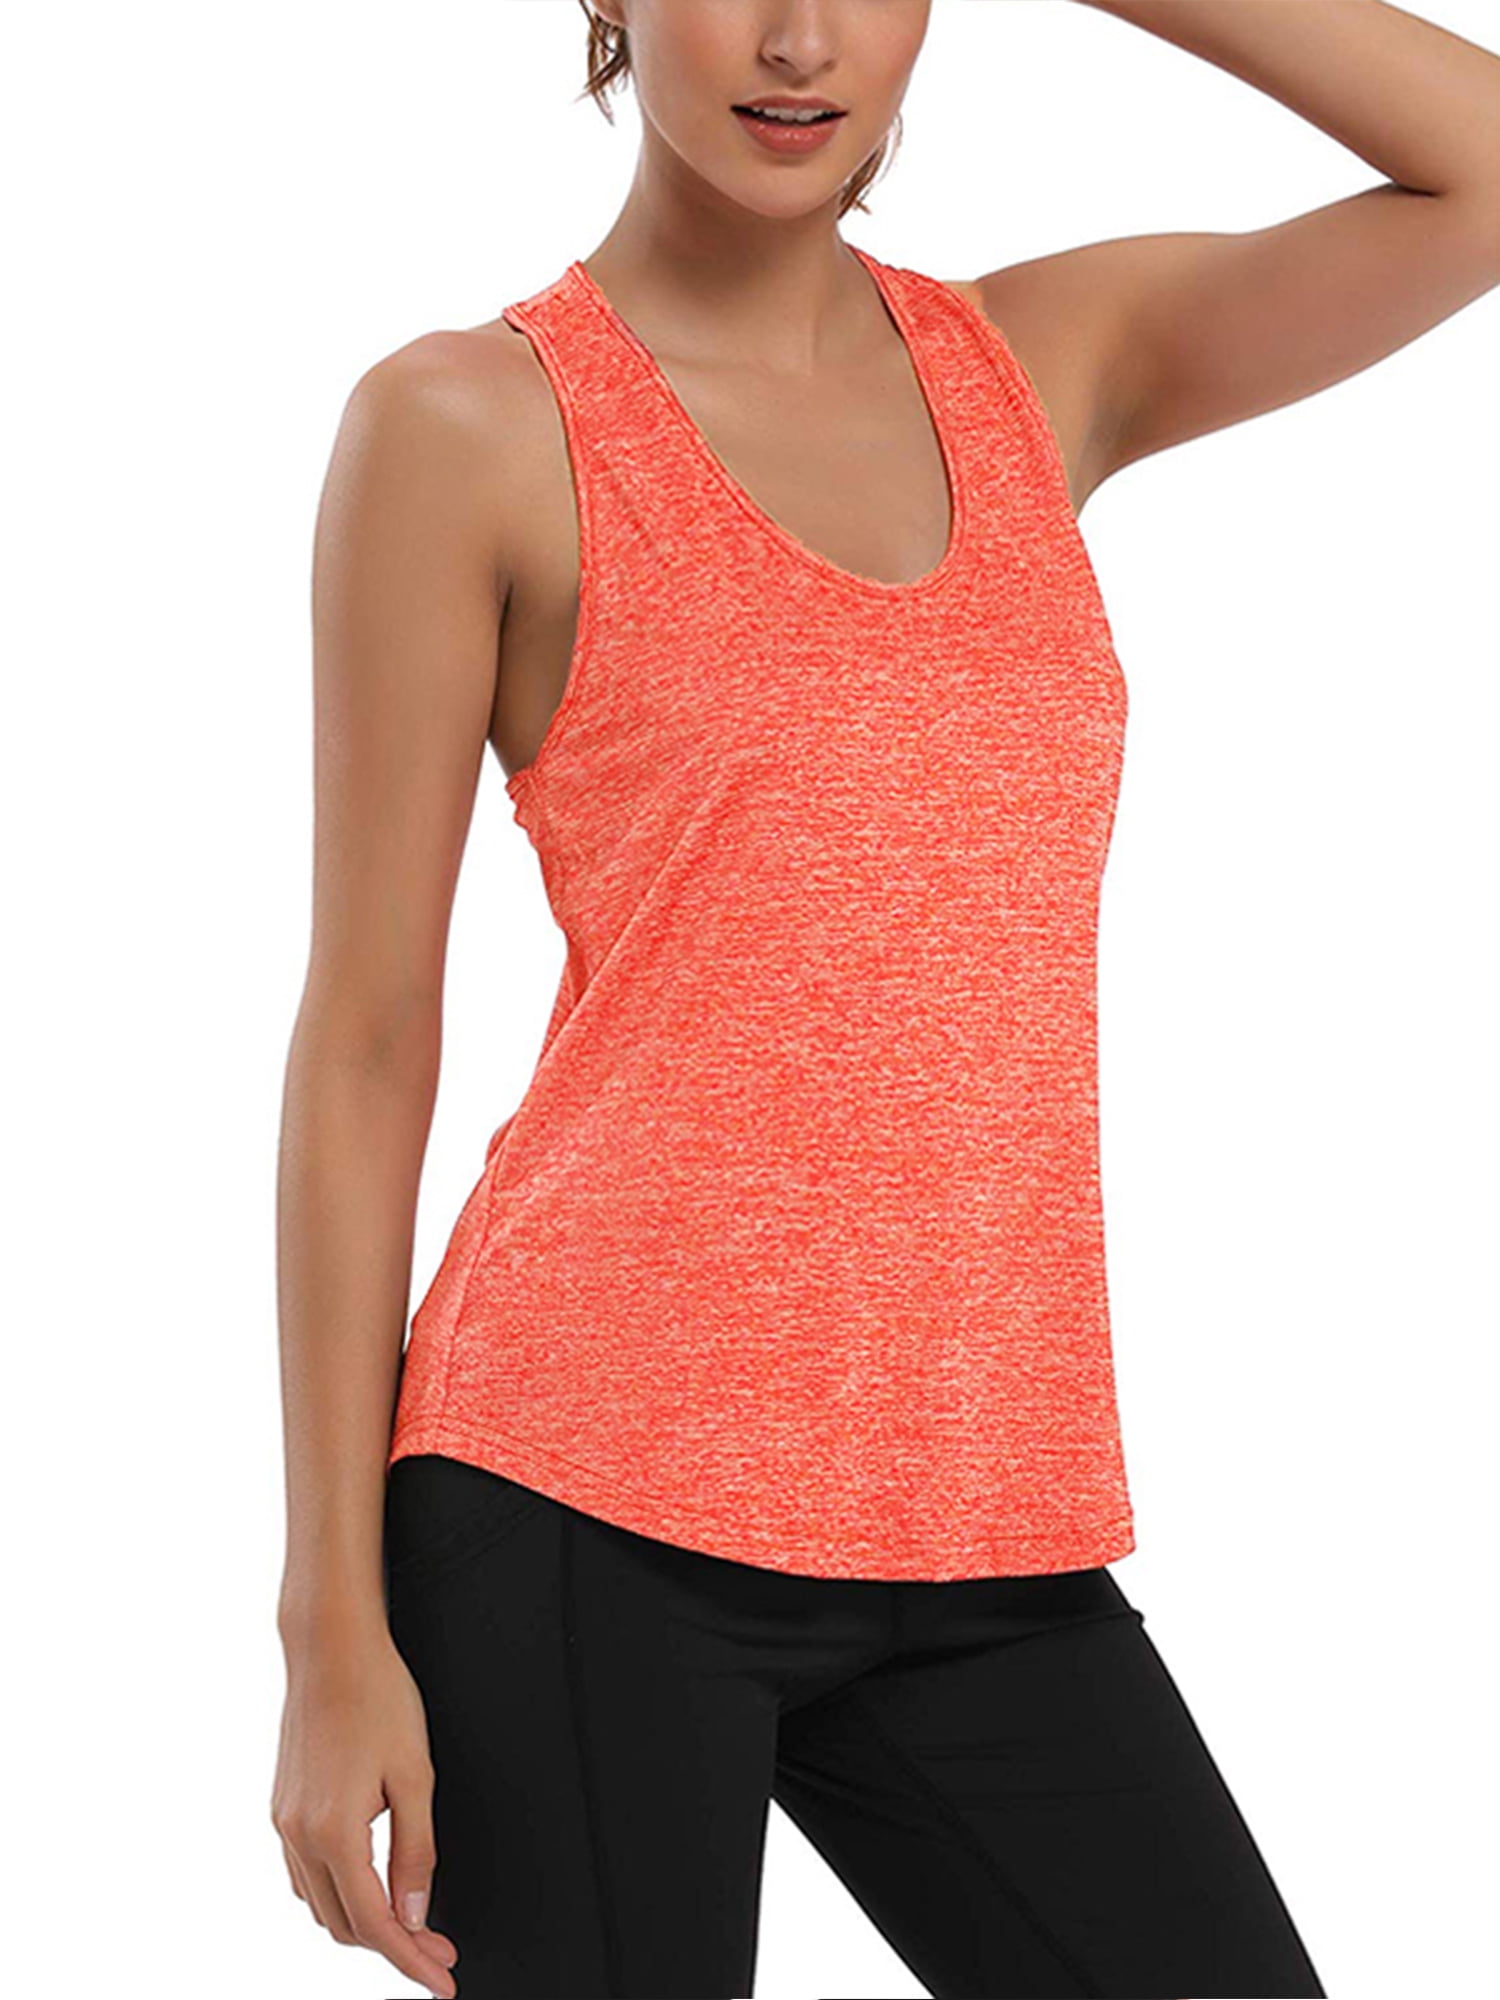 FAFAIR Workout Tank Top With Built in Bra Loose Racerback Yoga Sport Vest Running Tops Women 